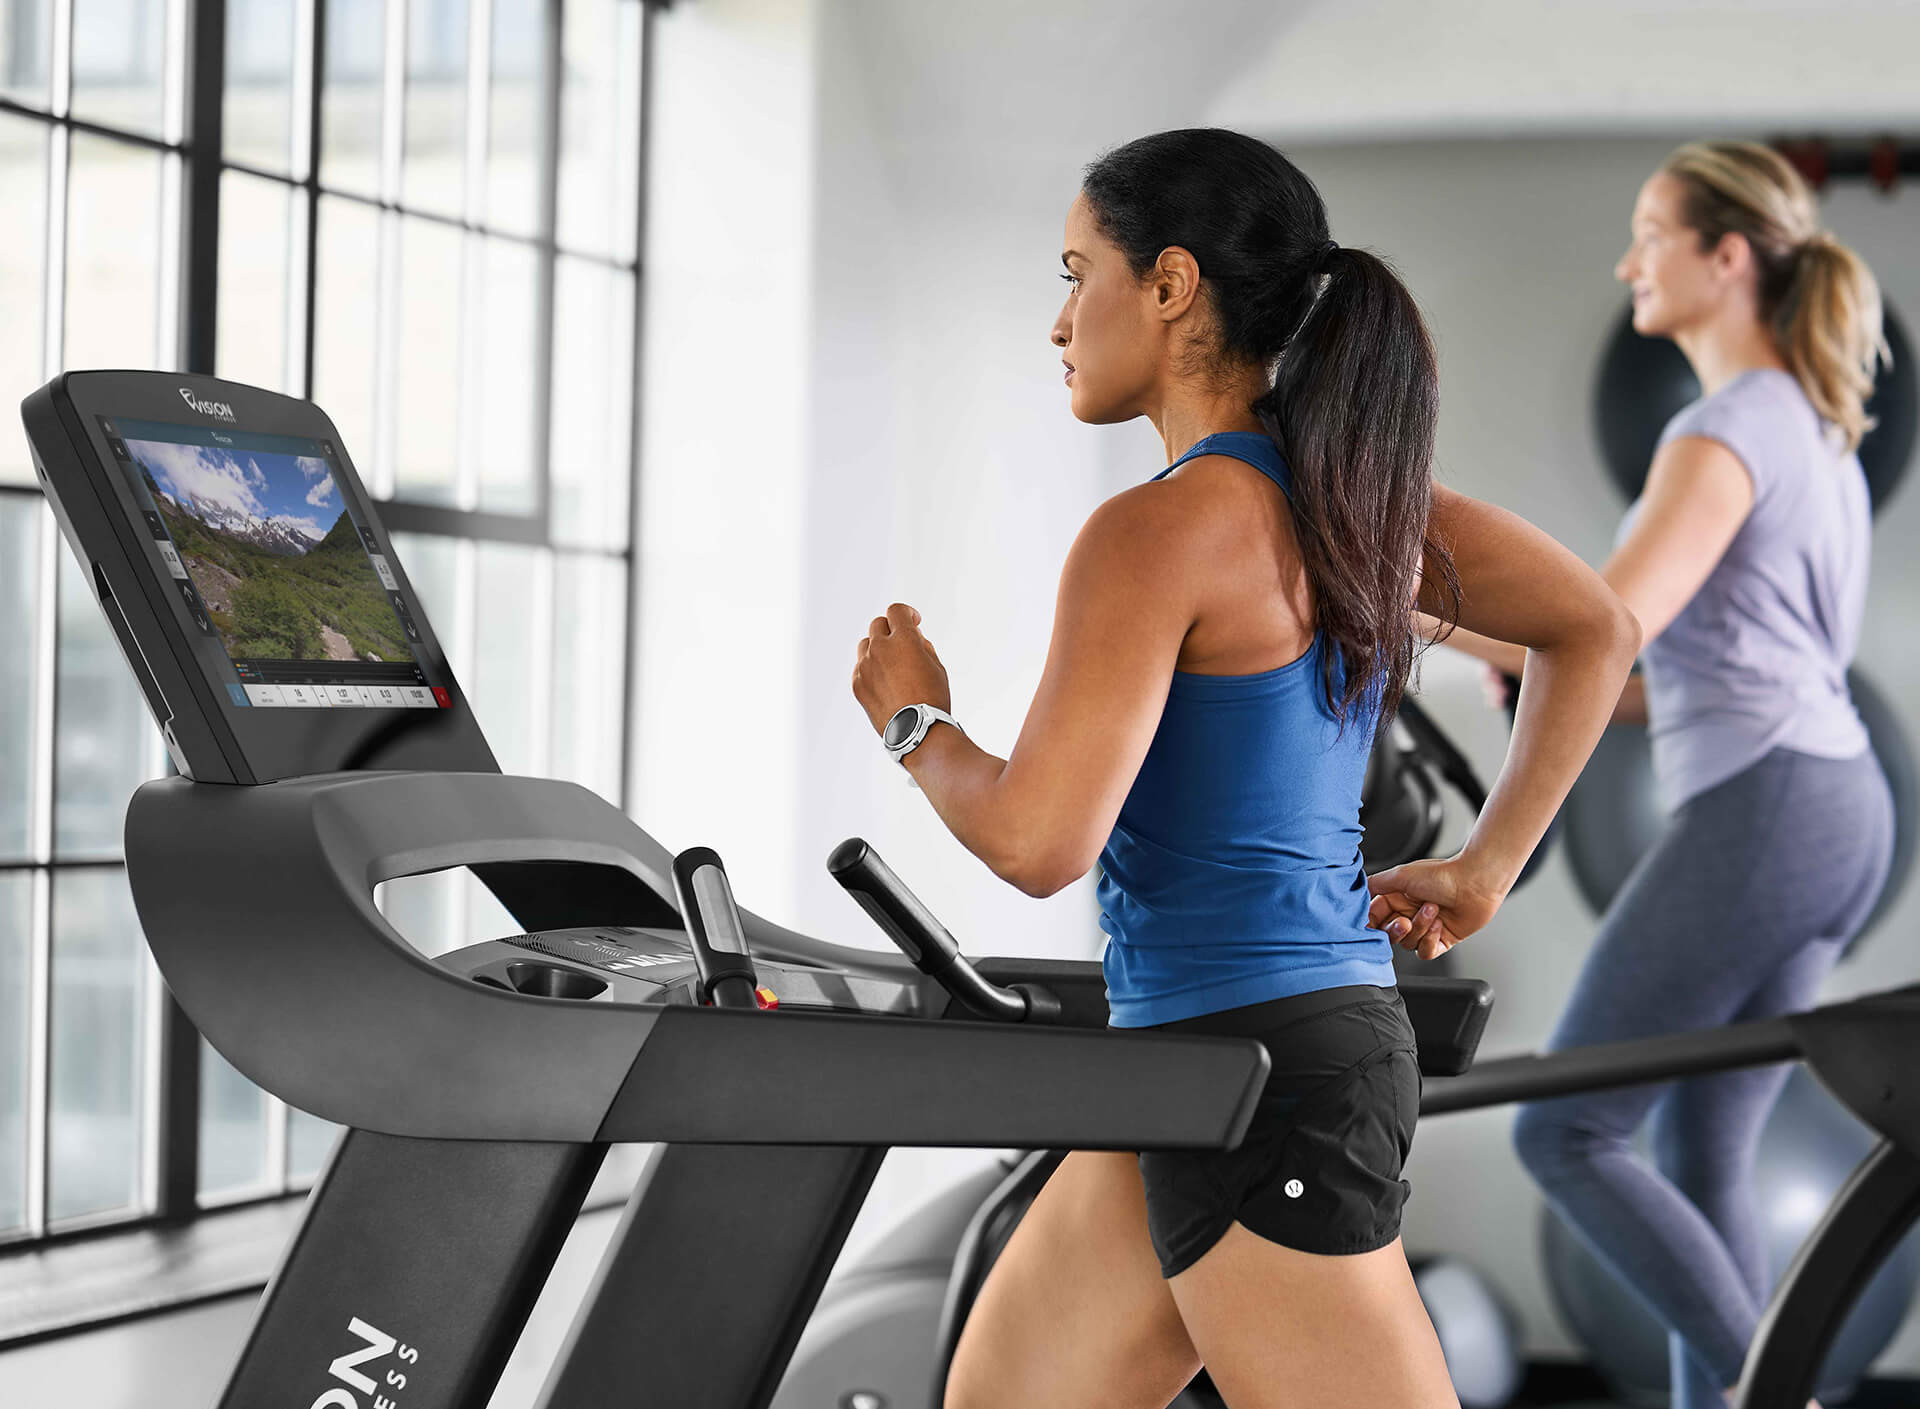 Home Gym Sets, Premium Workout Equipment